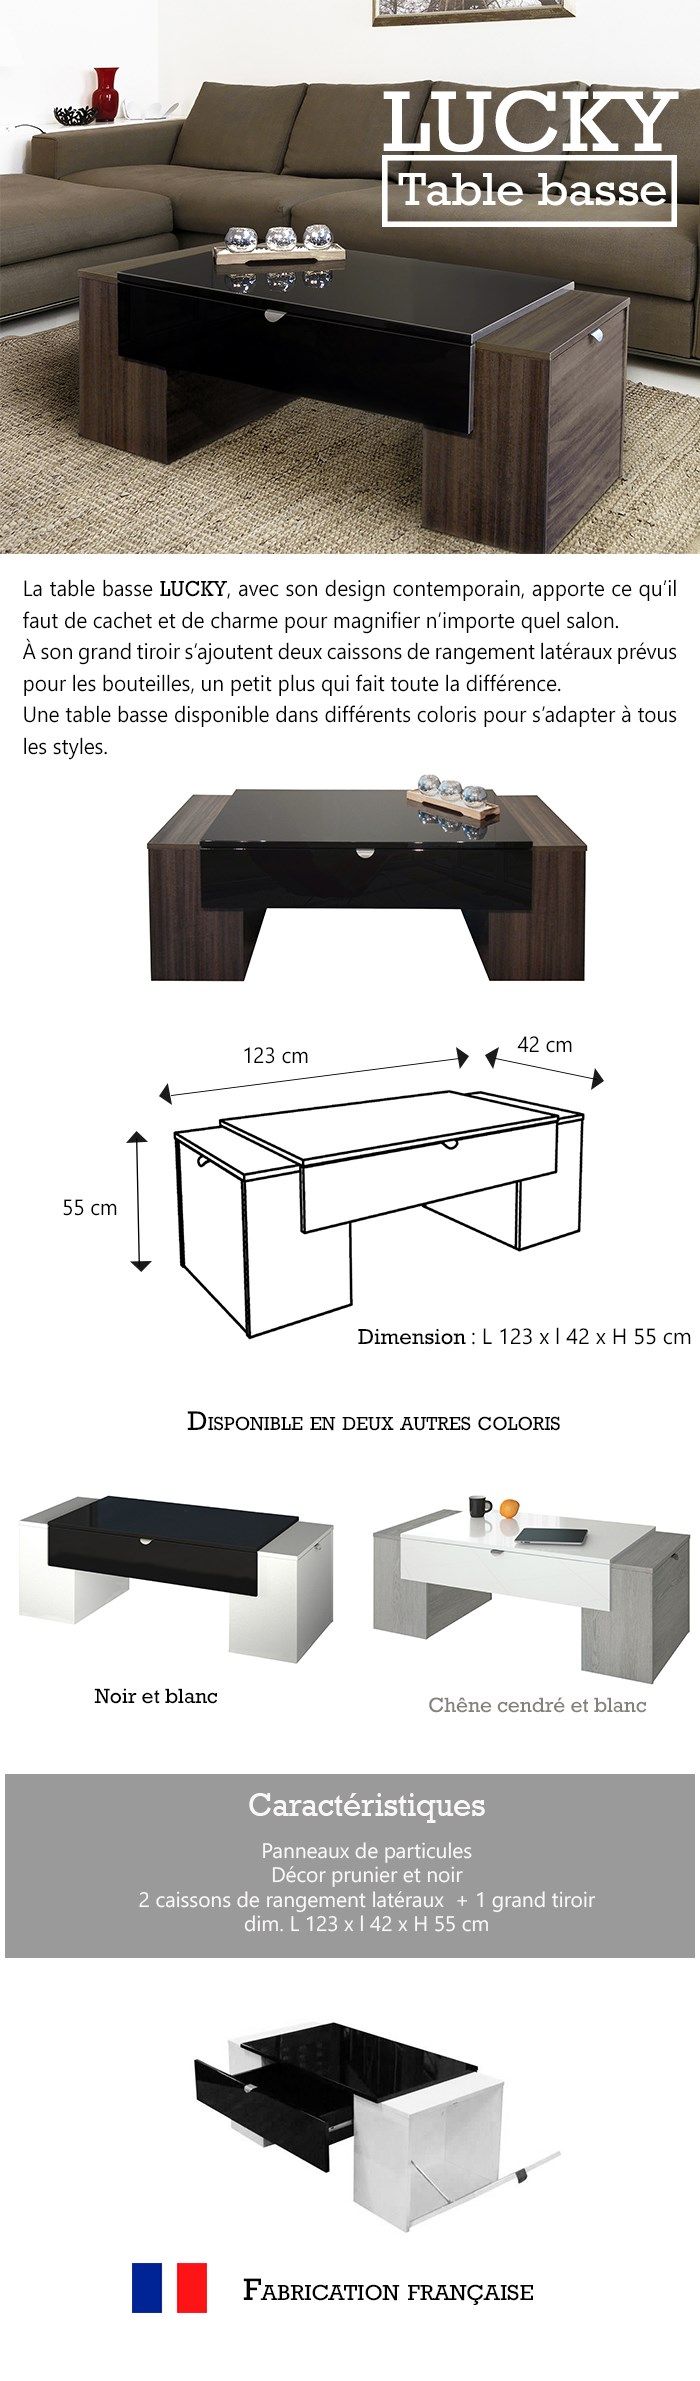 LUCKY Table basse chene cendre design contemporain rangements lateraux